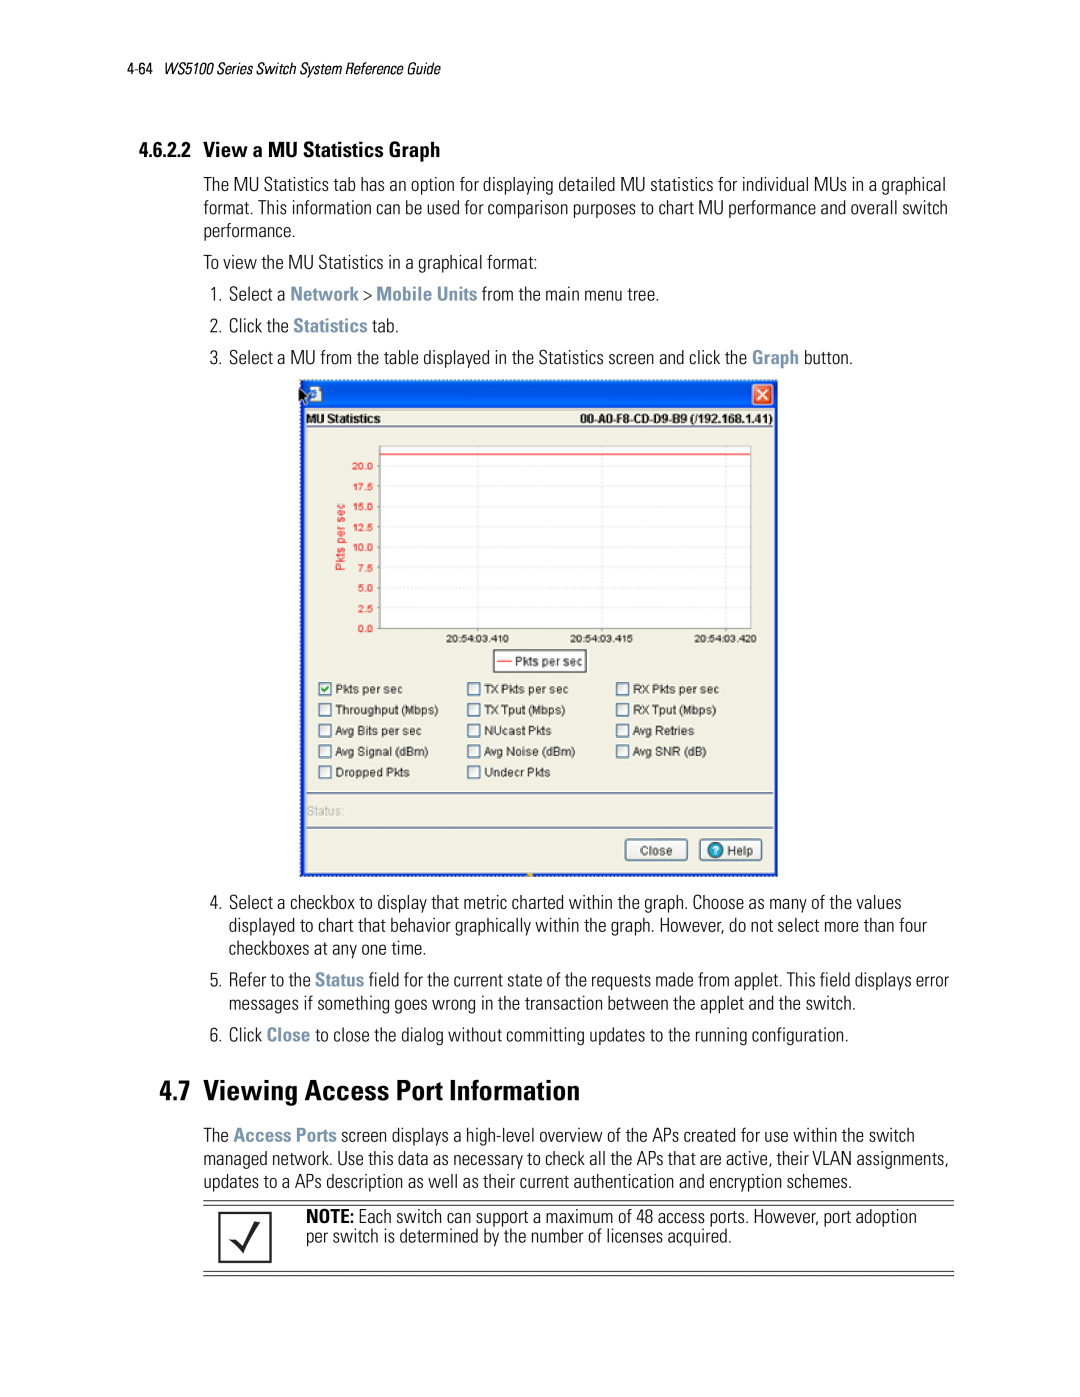 Motorola WS5100 manual 4.7Viewing Access Port Information, 4.6.2.2View a MU Statistics Graph 